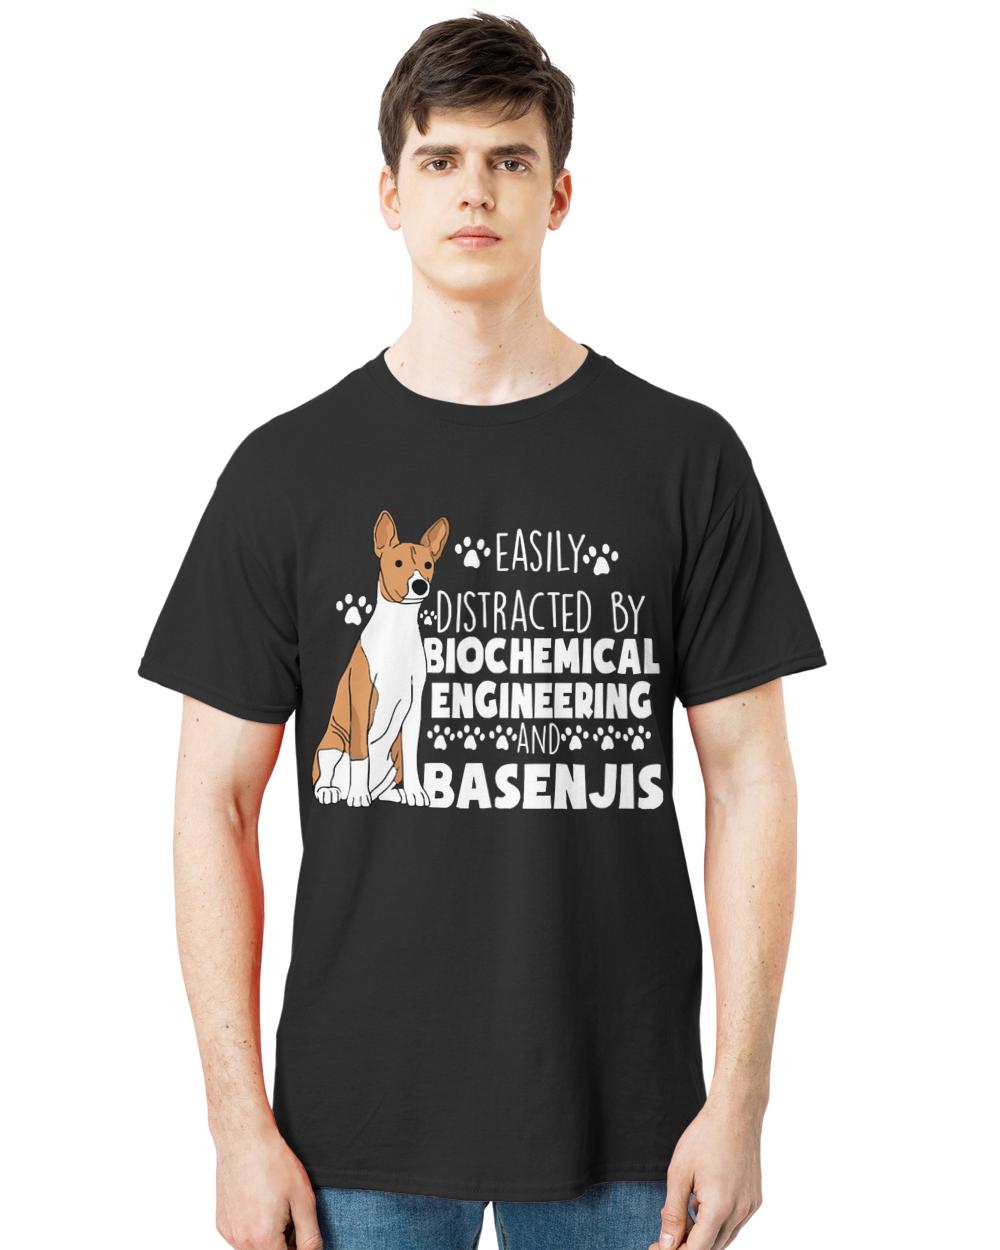 Biochemical Engineering Graduate T- Shirt Biochemical engineering and Basenjis T- Shirt